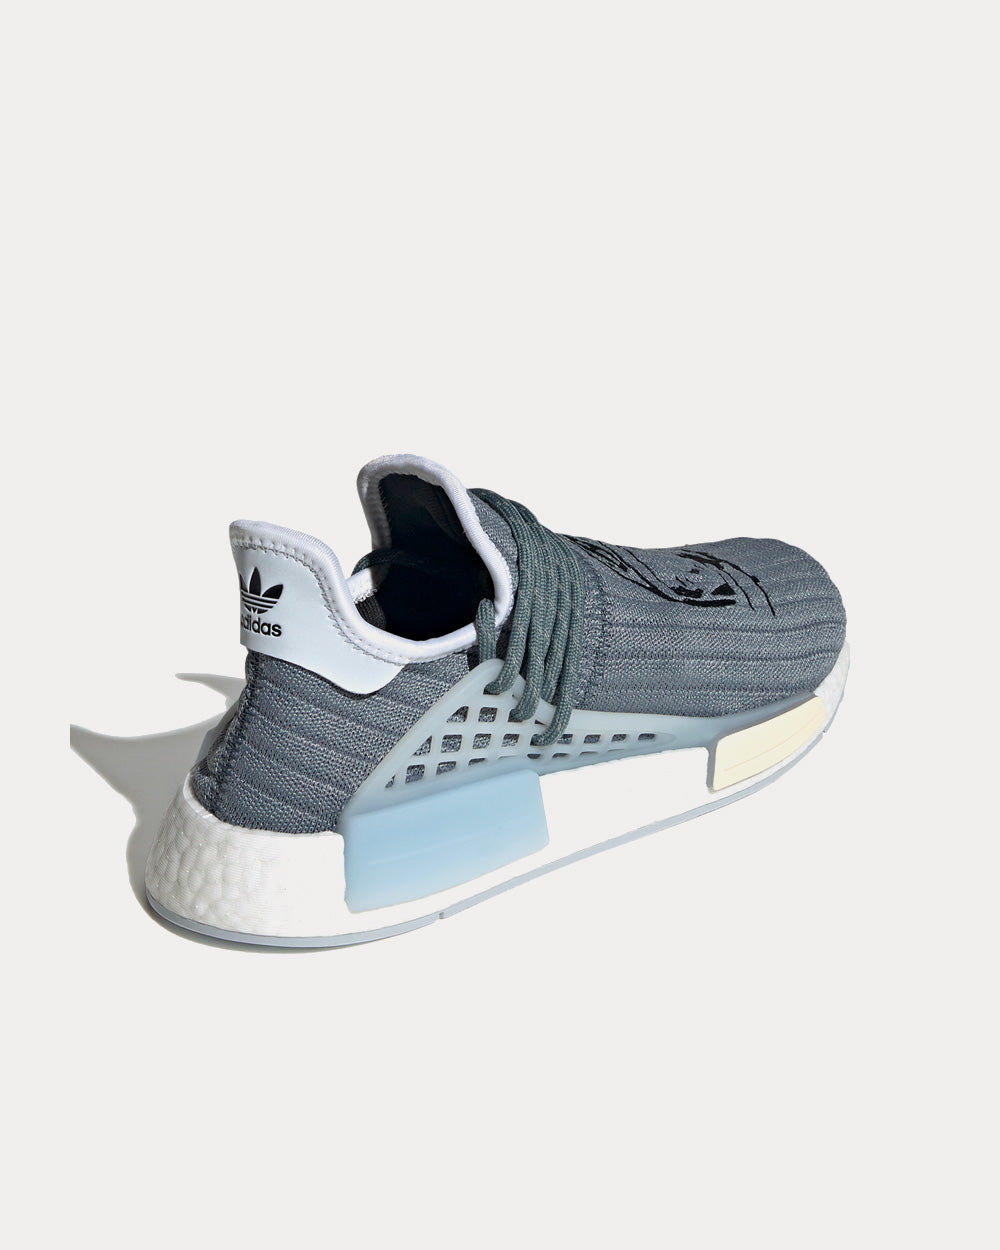 Adidas x Pharrell Williams - HU NMD Grey / Blue Low Top Sneakers